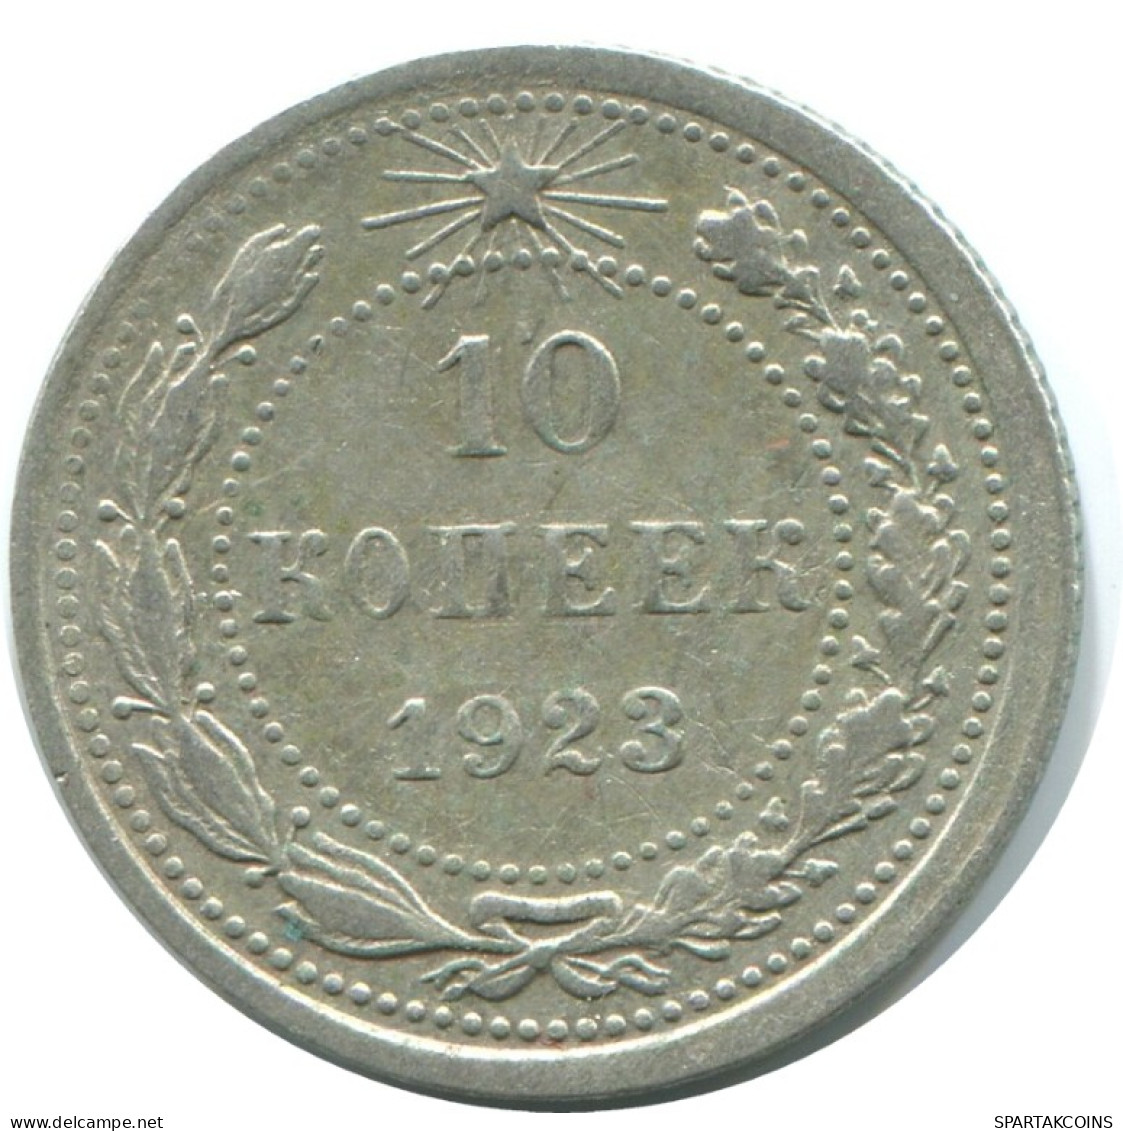 10 KOPEKS 1923 RUSIA RUSSIA RSFSR PLATA Moneda HIGH GRADE #AE889.4.E.A - Rusland